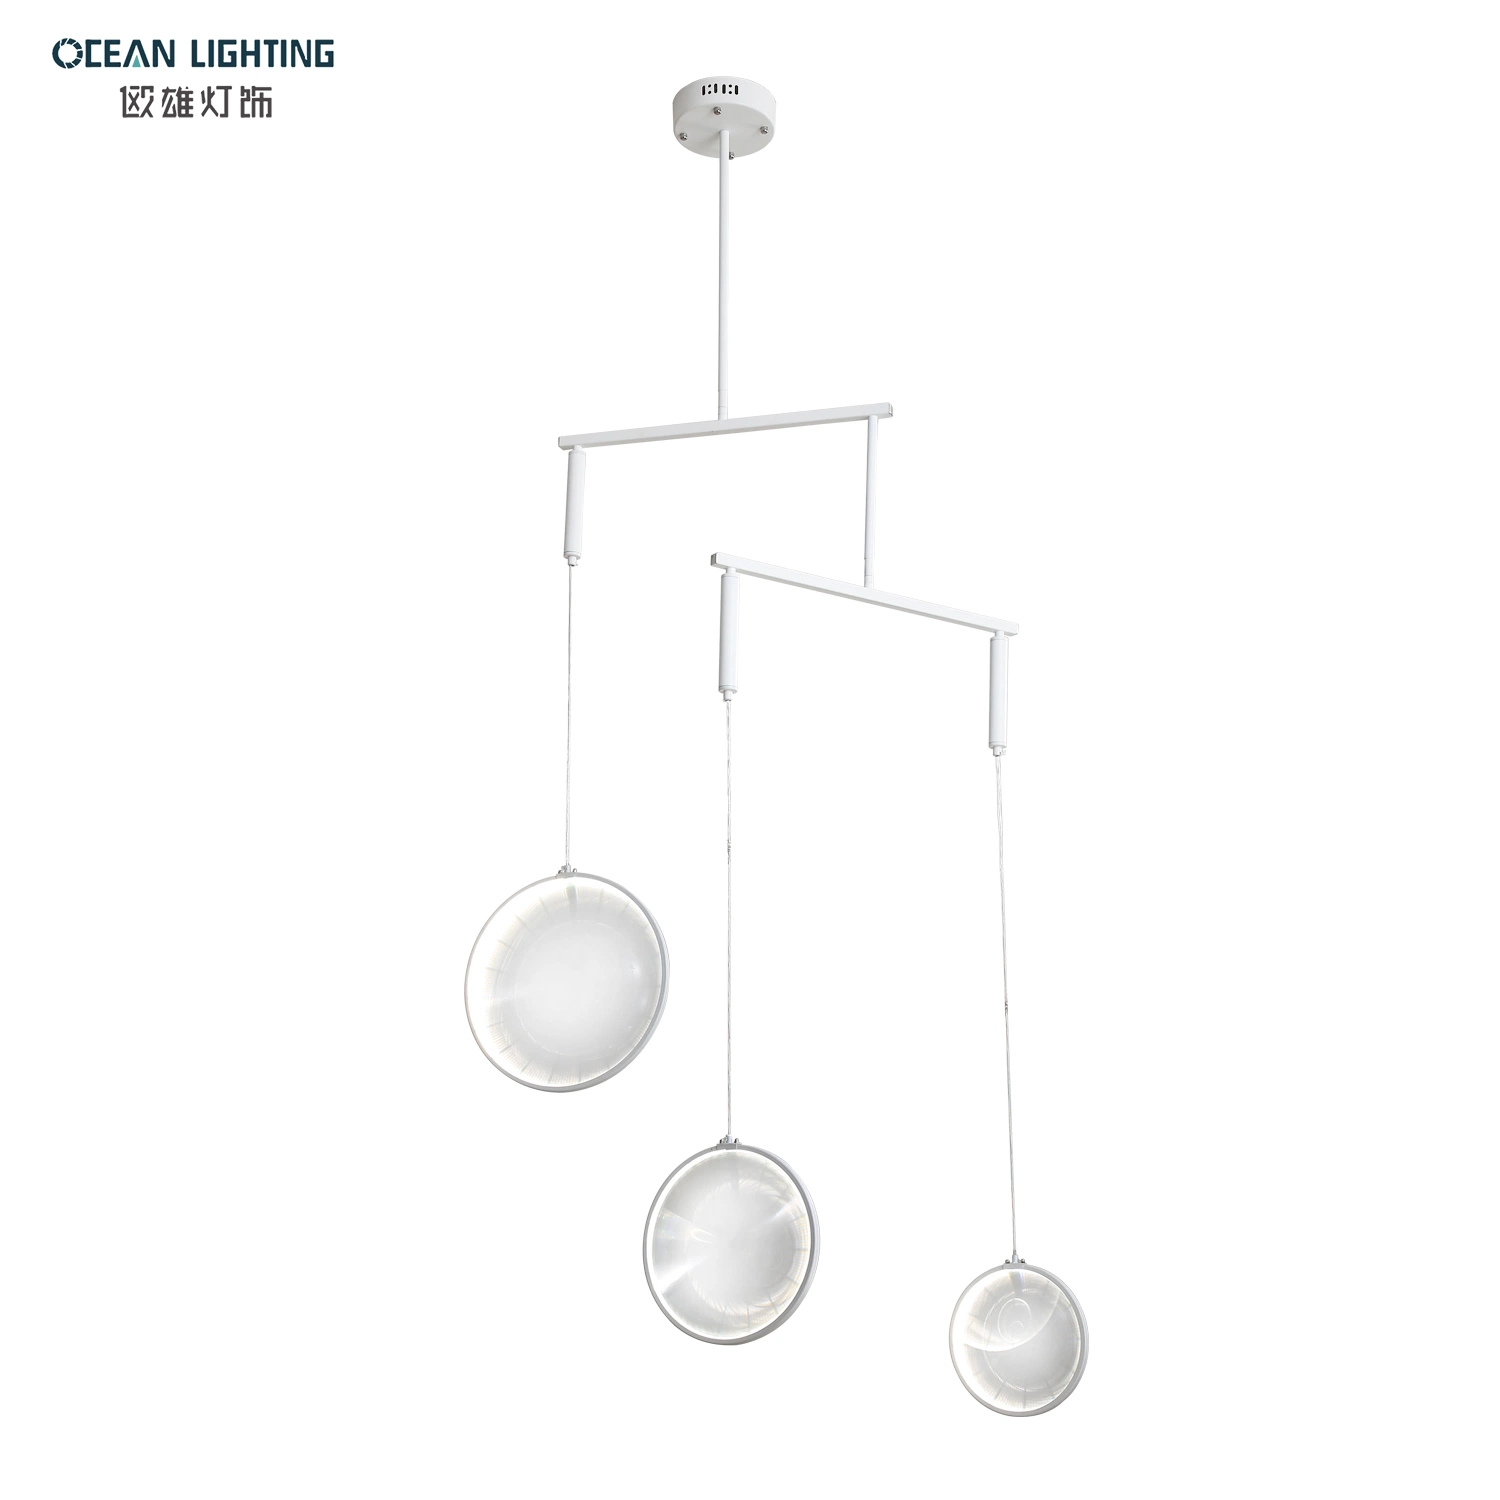 Ocean Lighting Wholesal Living Room Lights Acrylic Hanging Pendant Lamp